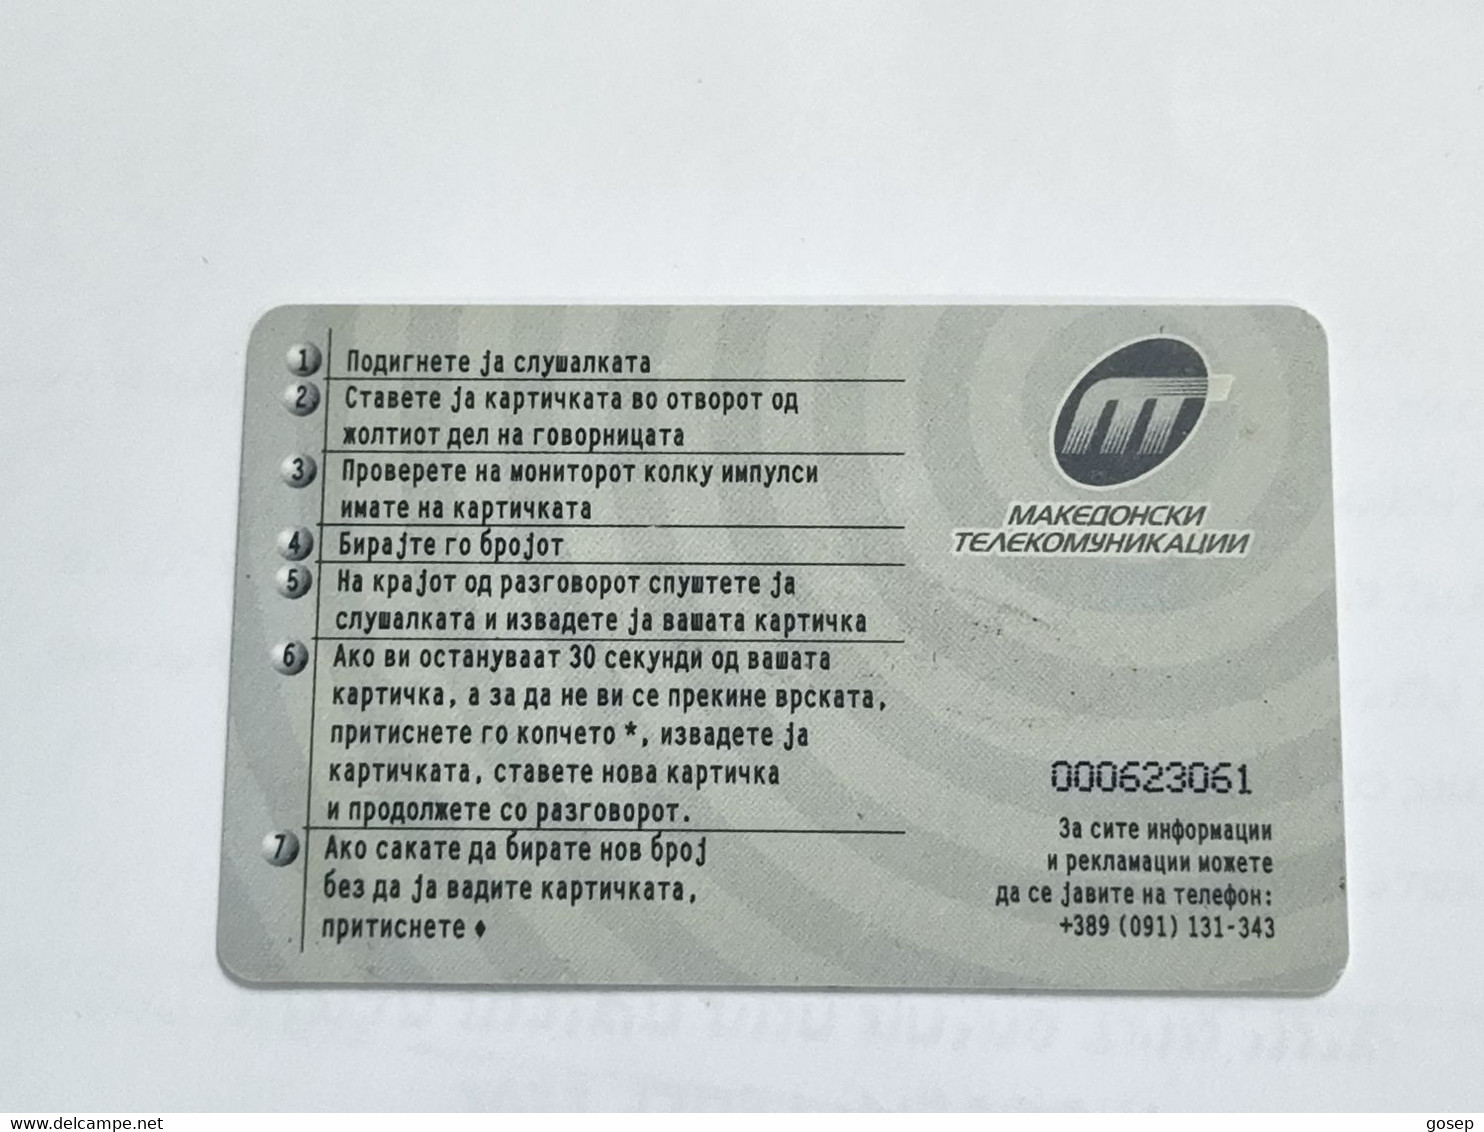 Macedonia-(MK-MAT-0008A)-Modern Technolog-(7)-(9/98)-(200units)-(000623061)-tirage-2.000-used Card+1card Prepiad Free - North Macedonia